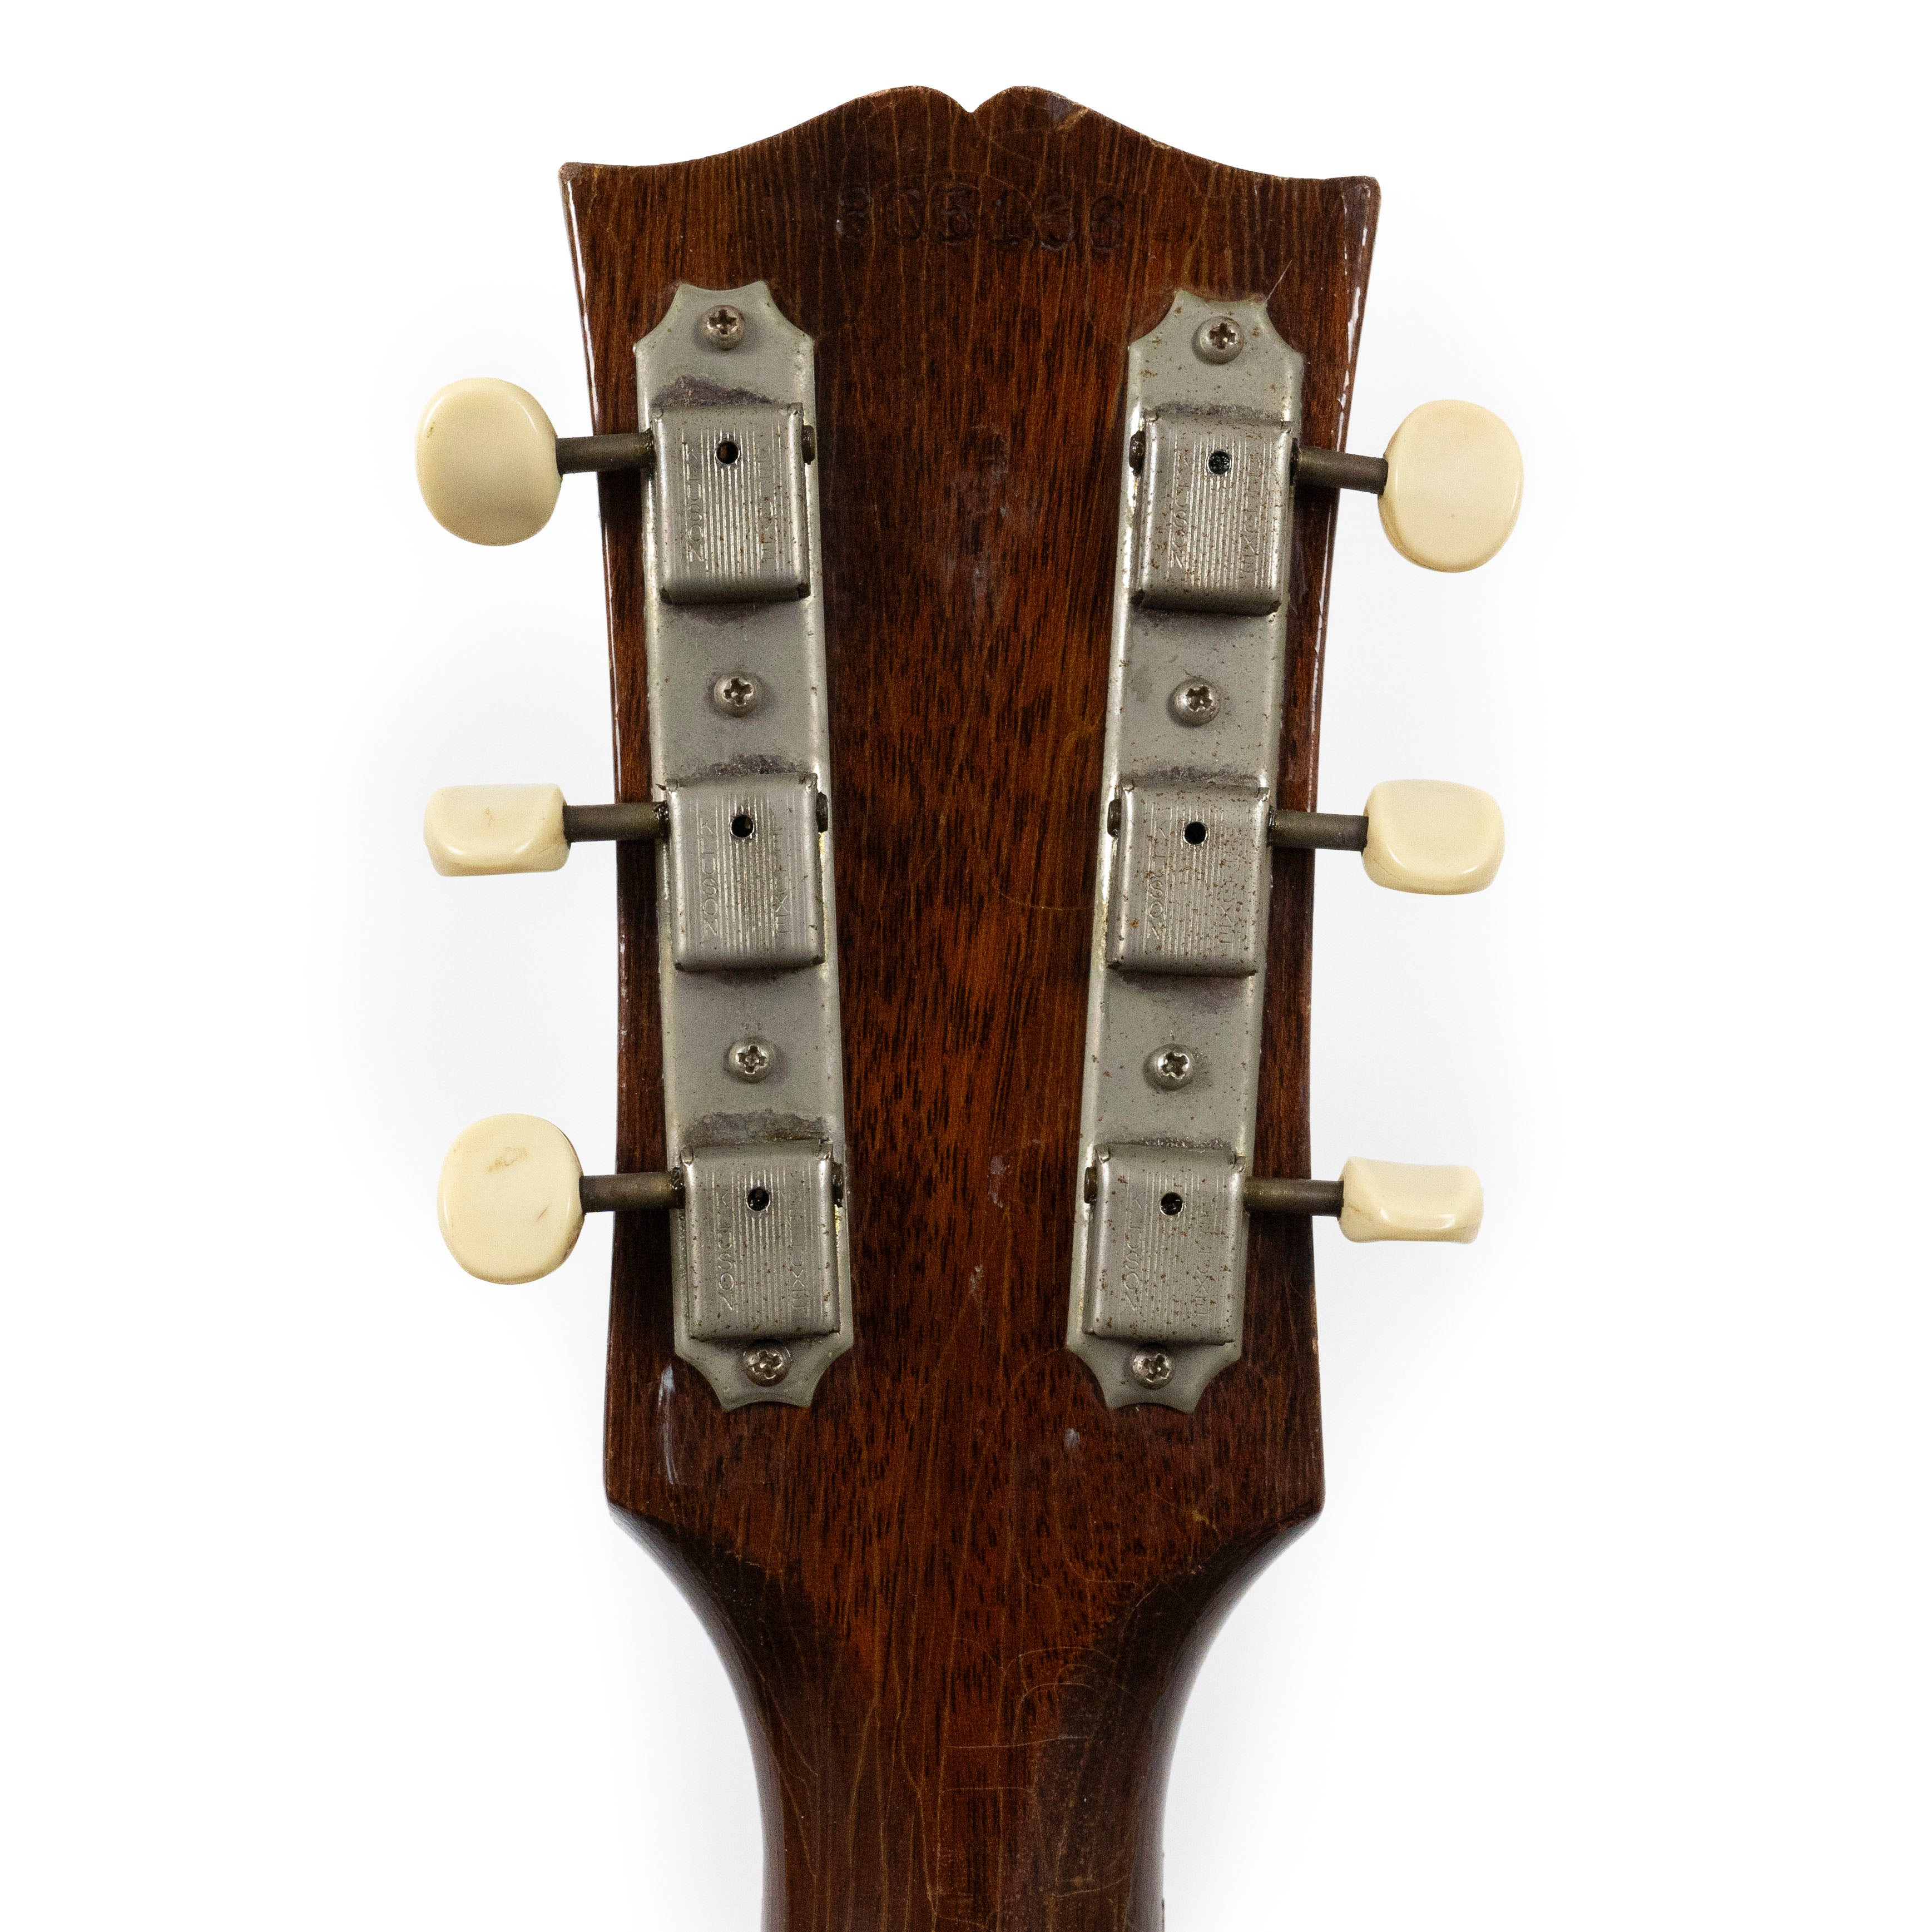 Gibson 1966 LG-1 Sunburst